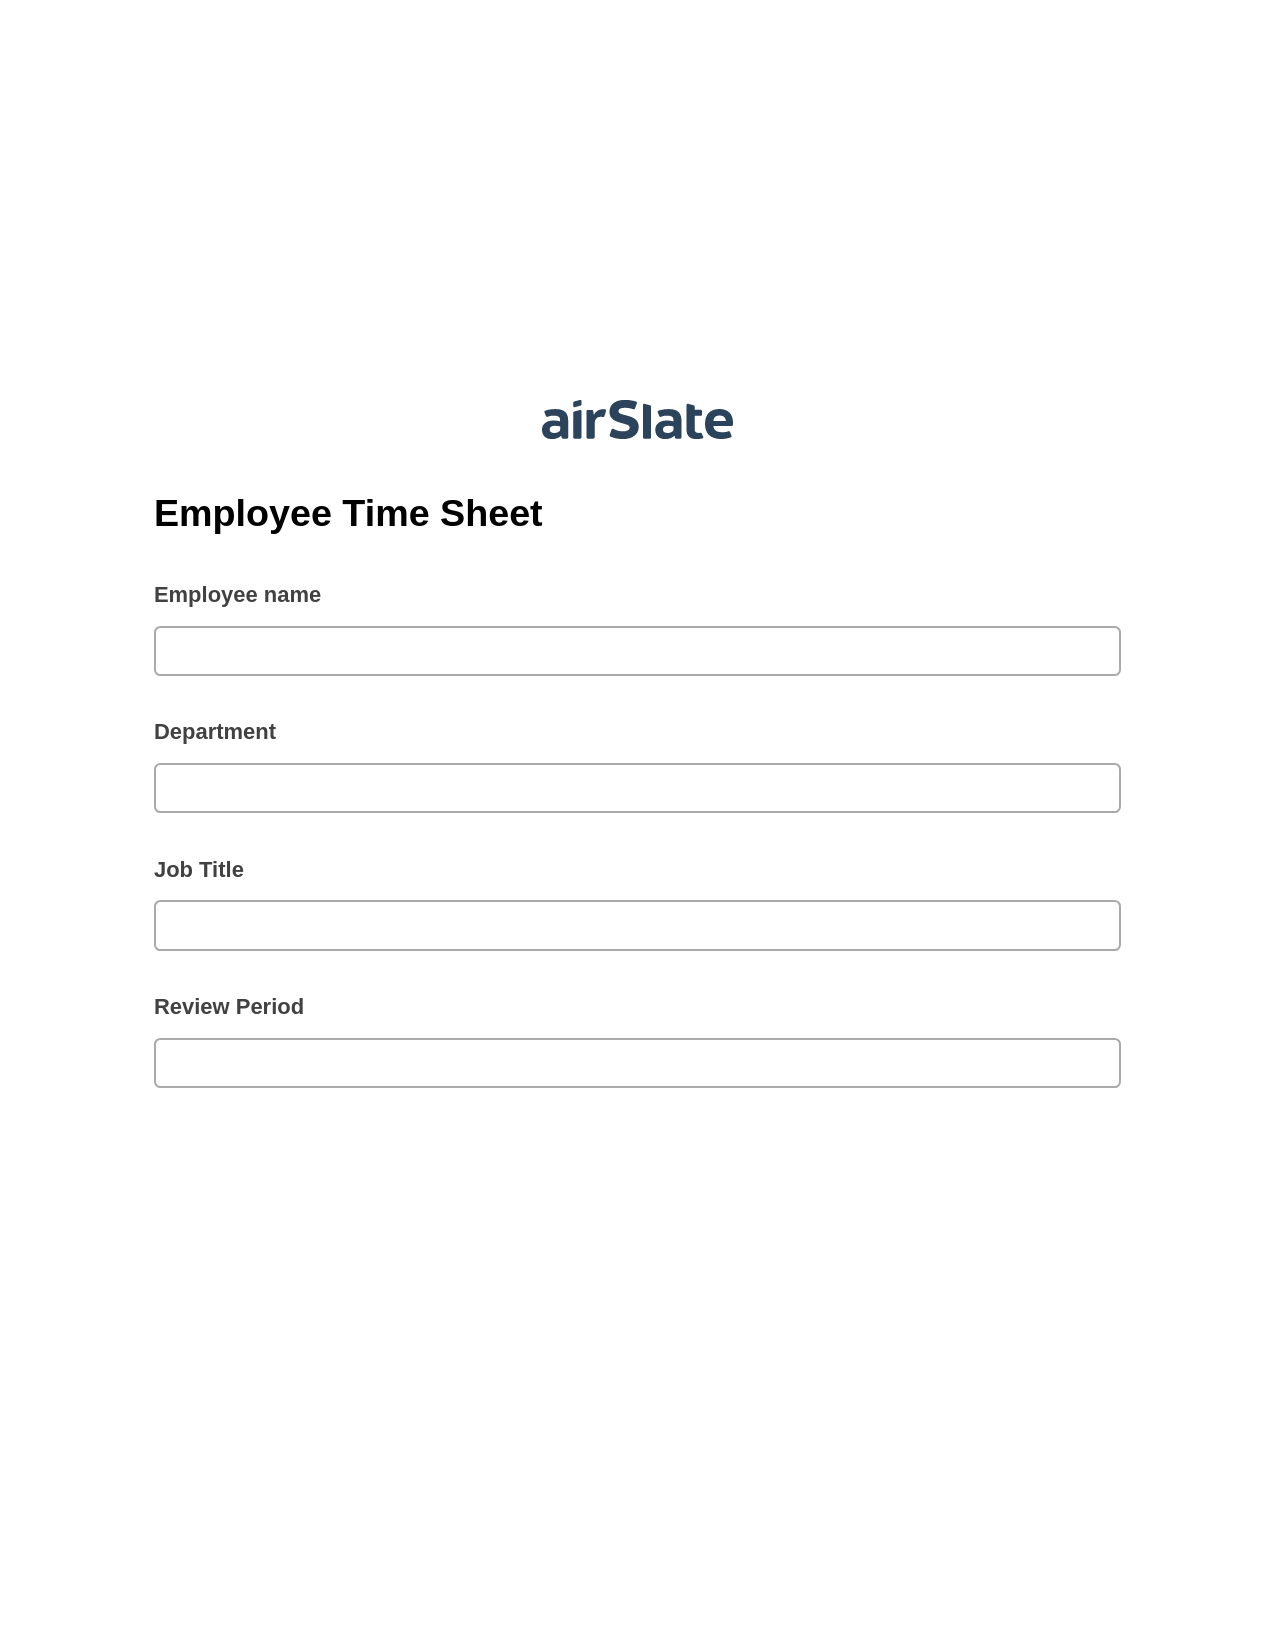 Employee Time Sheet Pre-fill Dropdowns from Google Sheet Bot, Create slate addon, Export to Google Sheet Bot